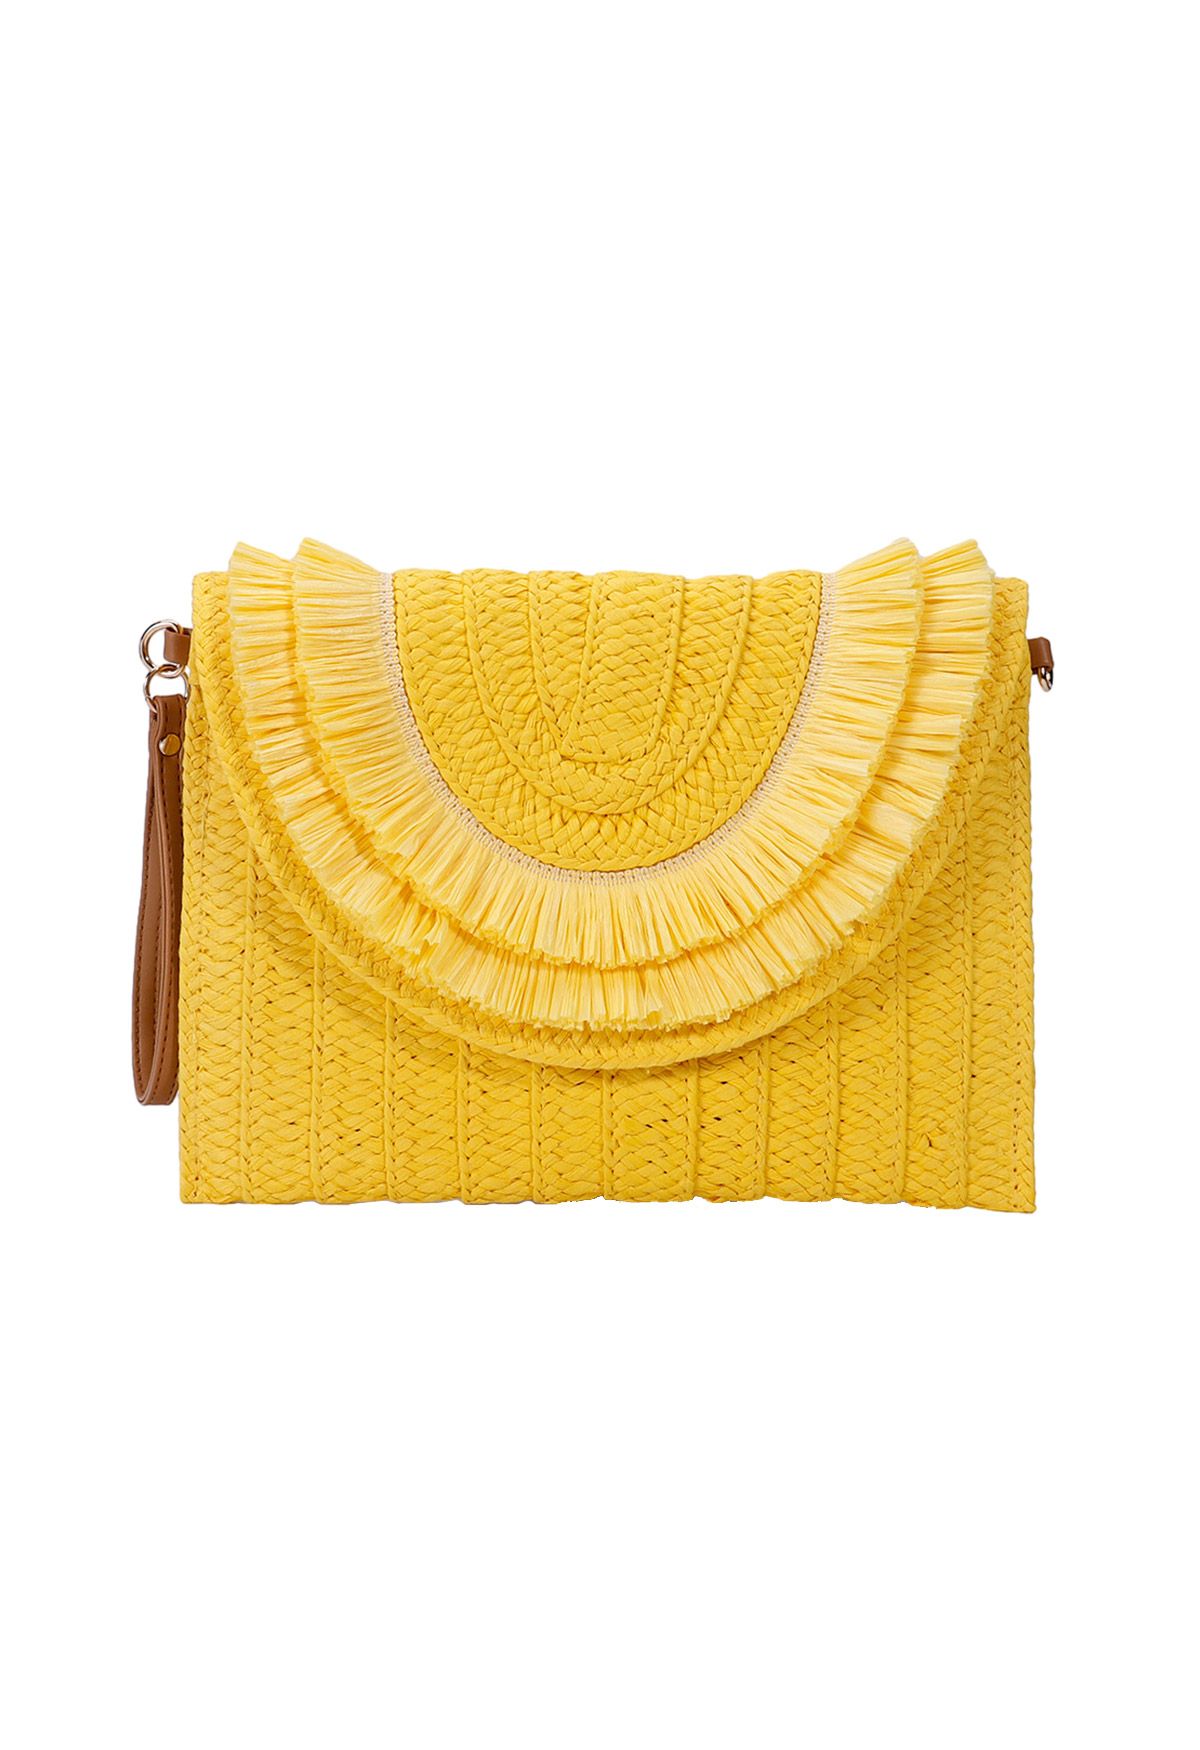 Raffia Solid Color Envelope Bag in Yellow